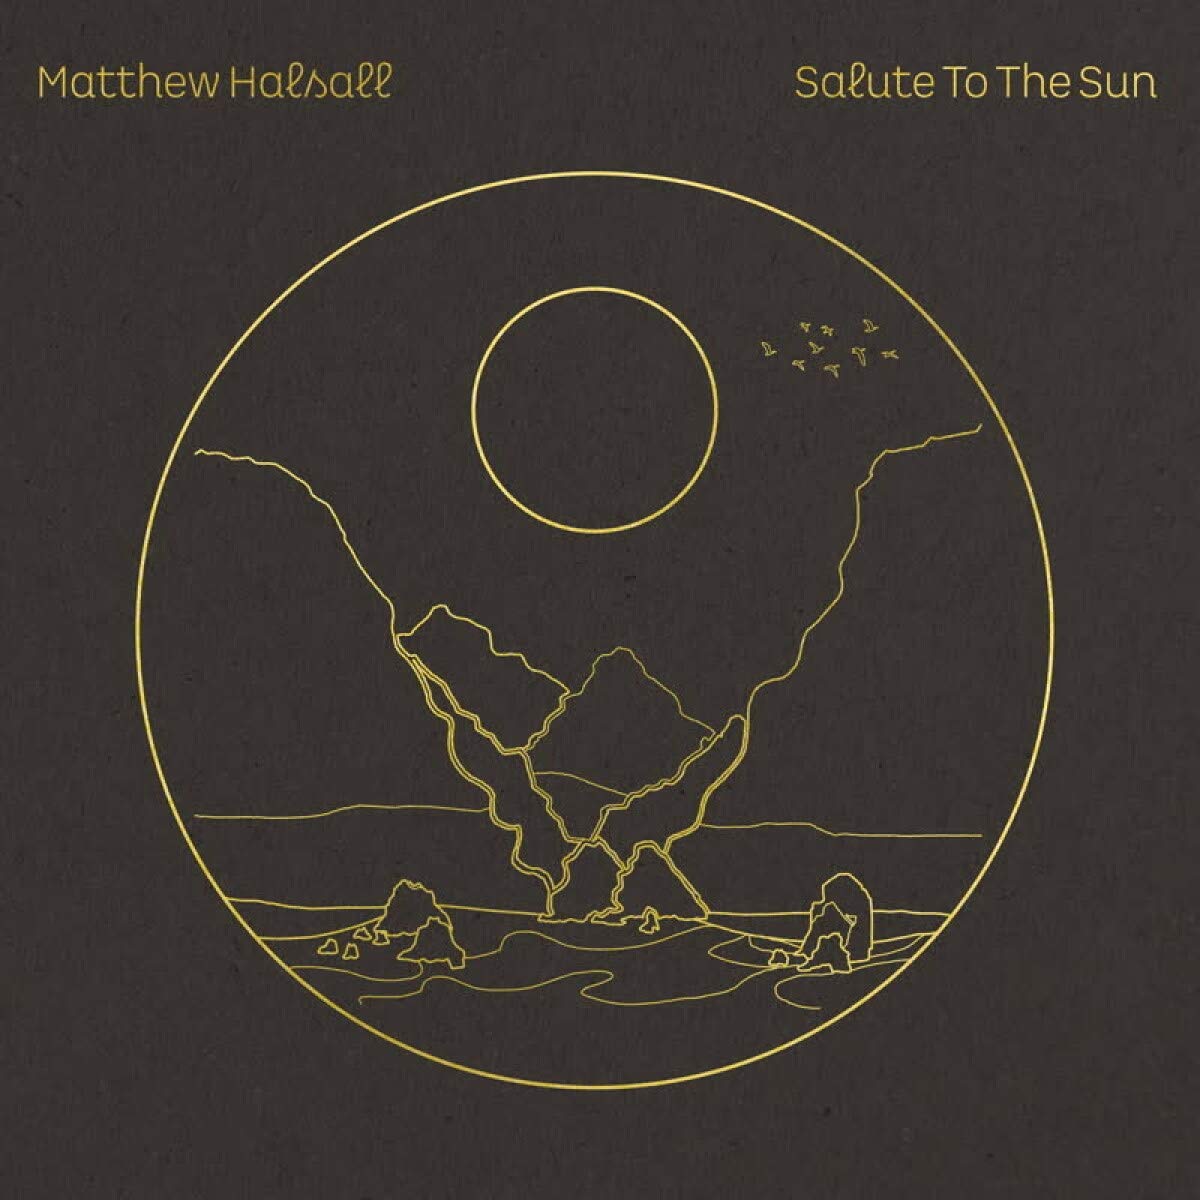 MATTHEW HALSALL - Salute to the Sun cover 